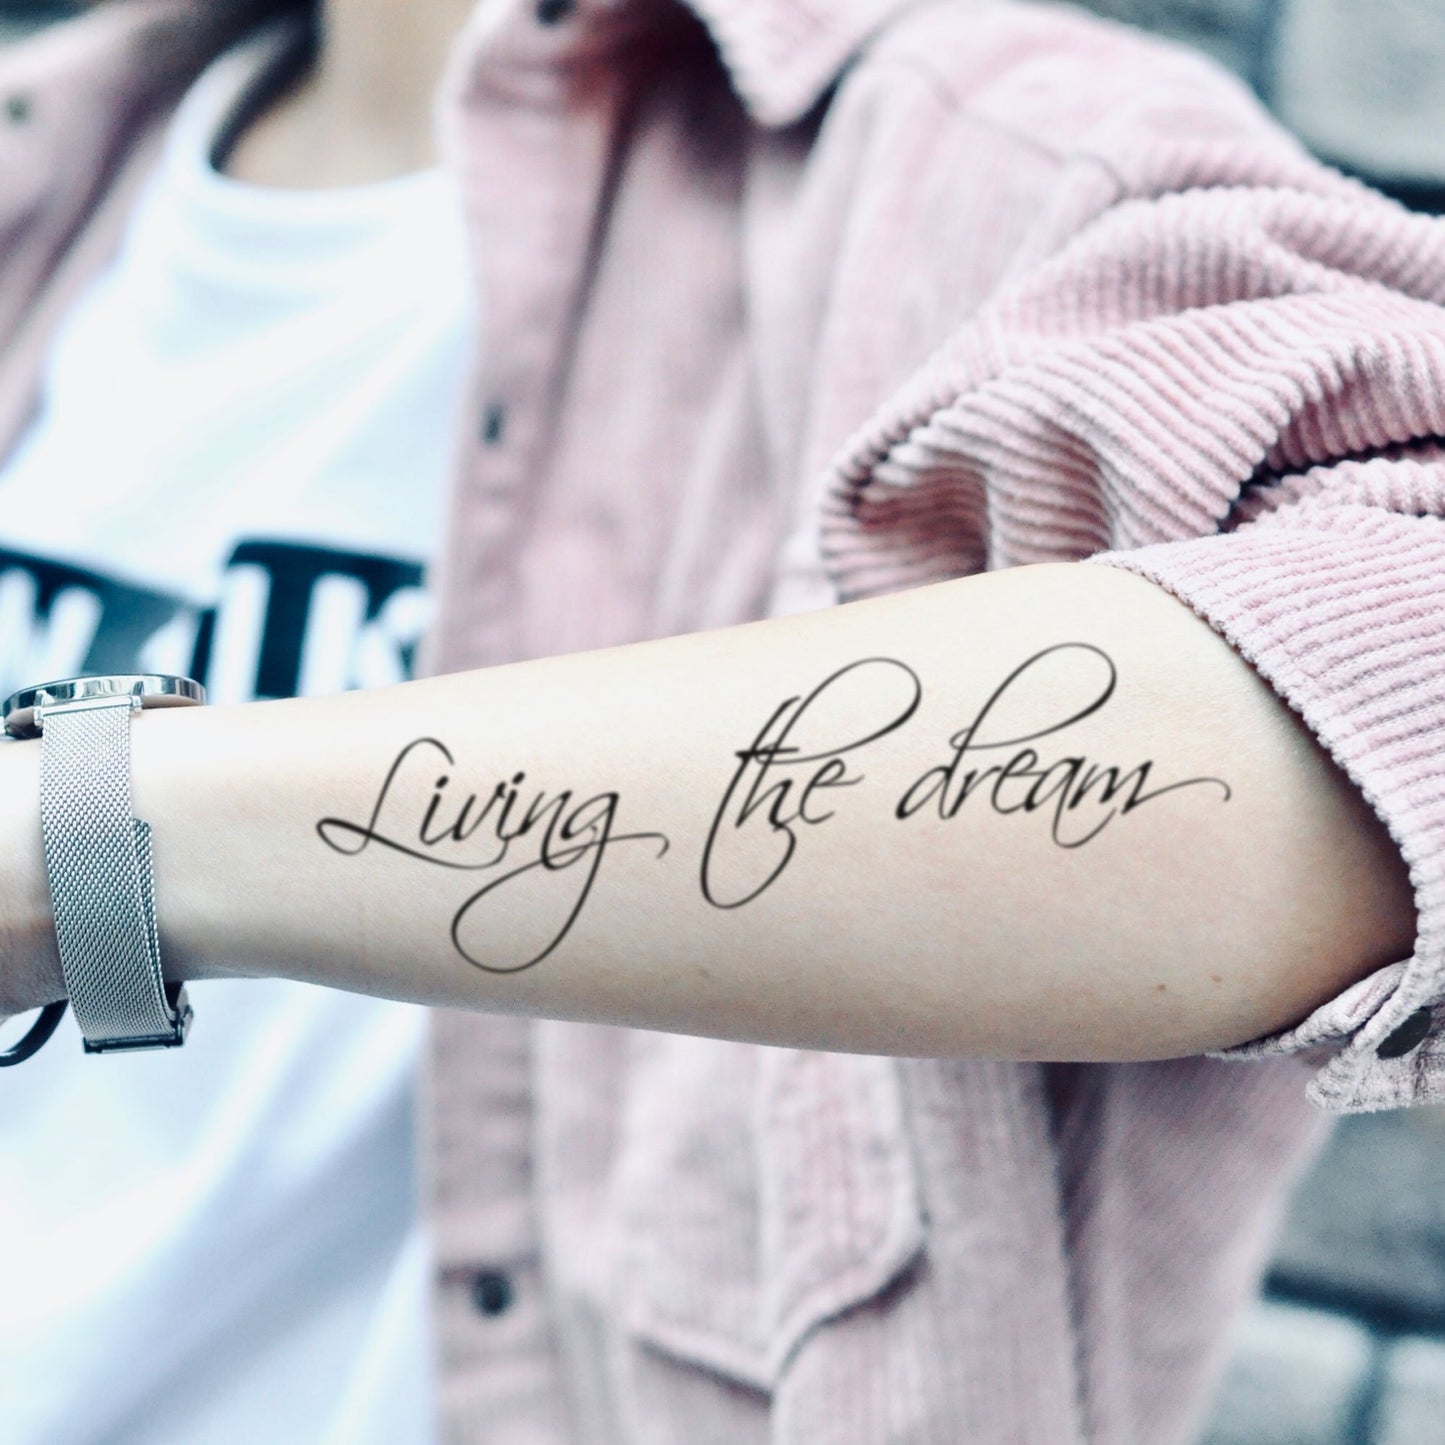 fake medium living the dream lower arm lettering temporary tattoo sticker design idea on forearm